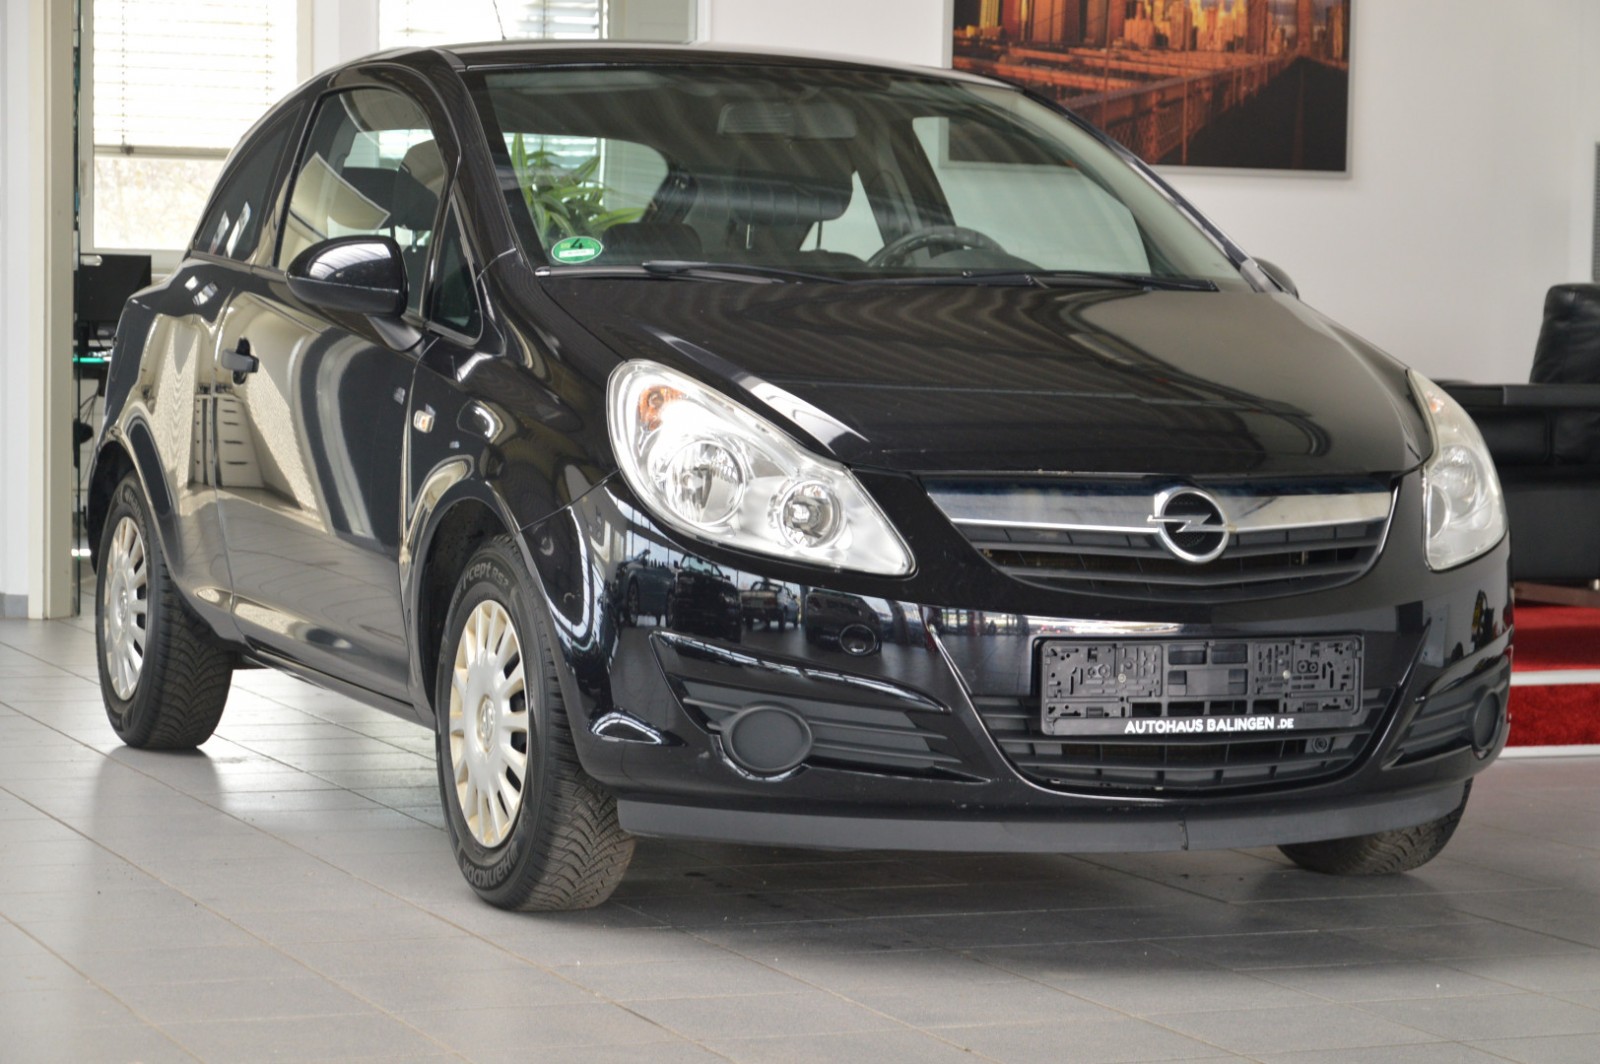 Opel Corsa D Selection 110 Jahre gebraucht kaufen in Balingen Preis 3990  eur - Int.Nr.: 1548 VERKAUFT